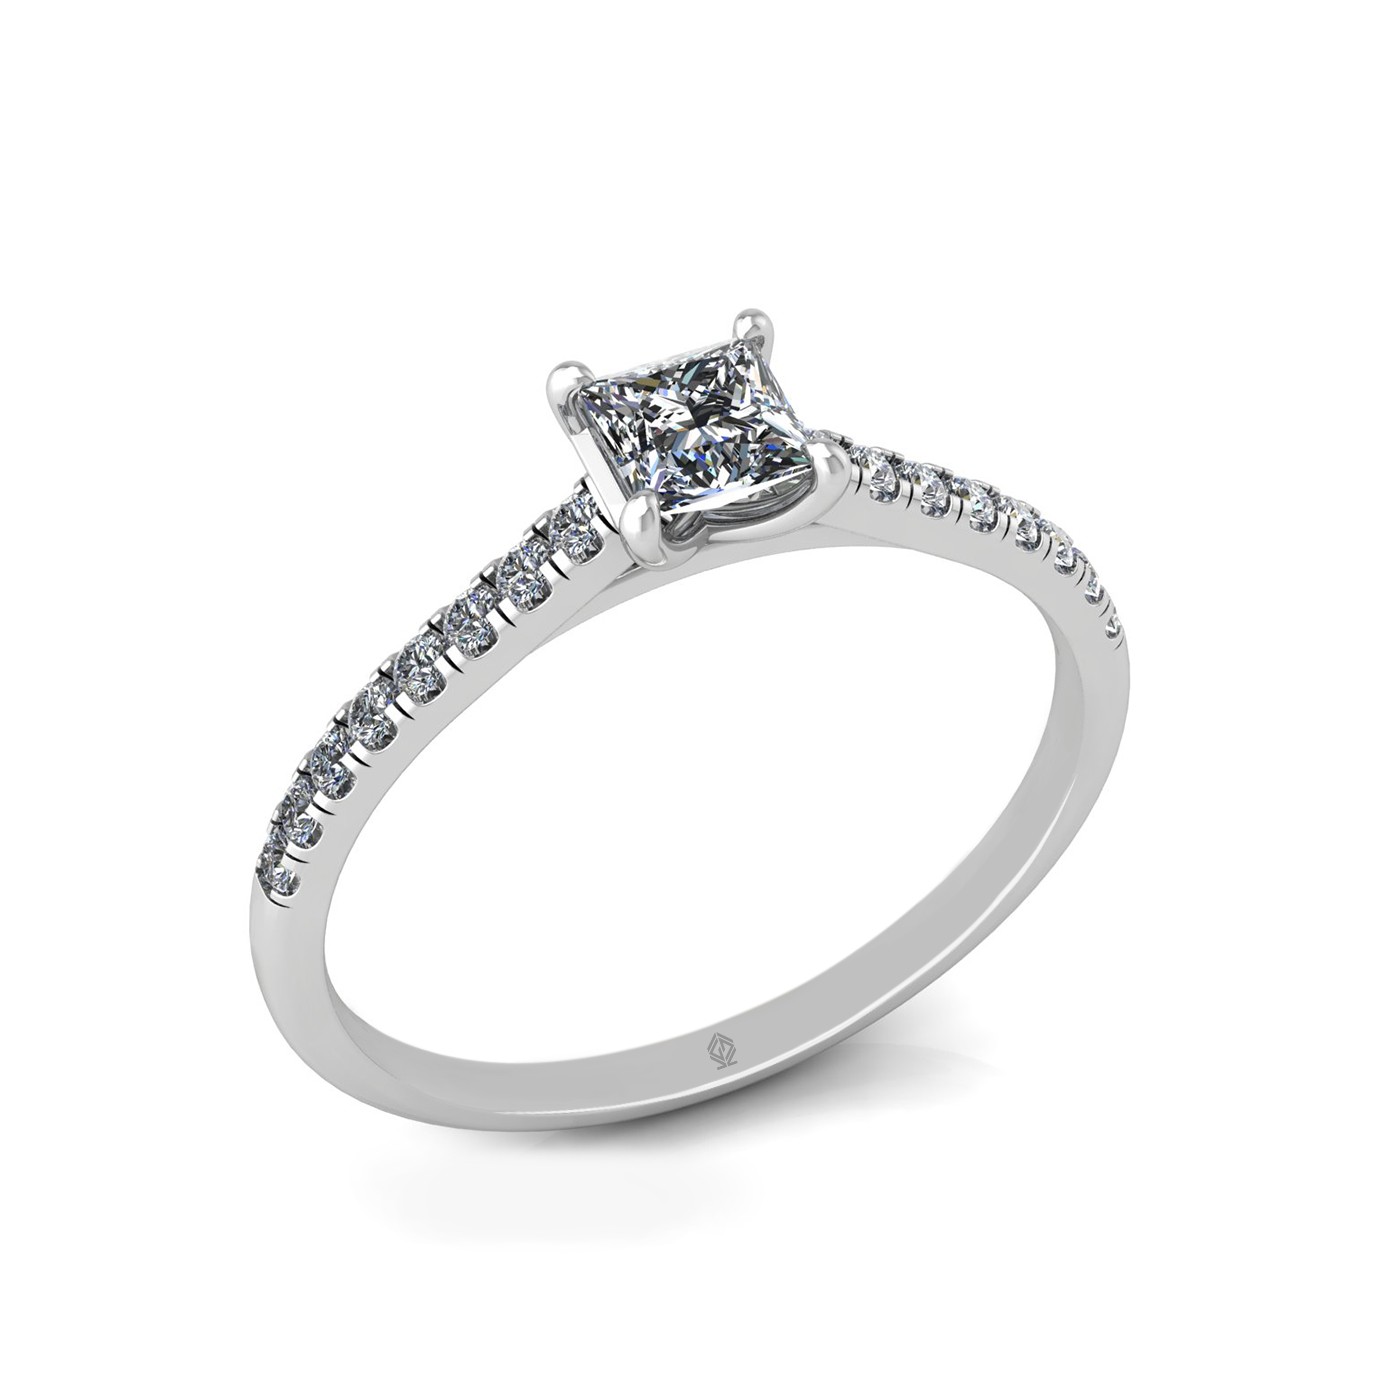 18k white gold  0,30 ct 4 prongs princess cut diamond engagement ring with whisper thin pavÉ set band